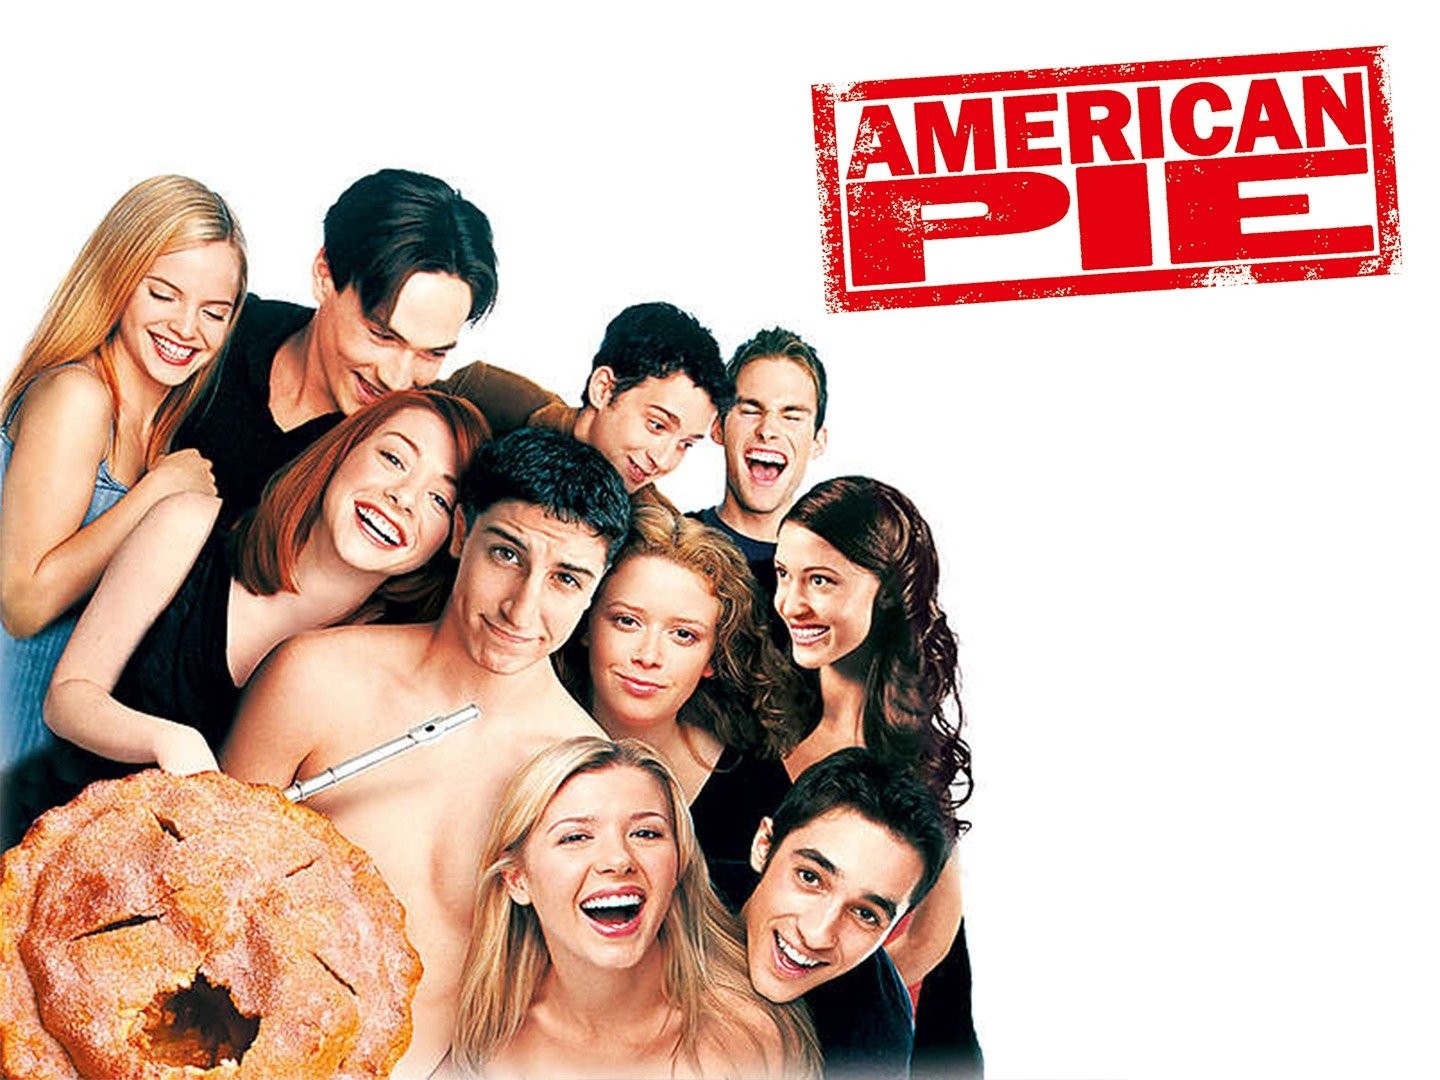 American Pie artwork.